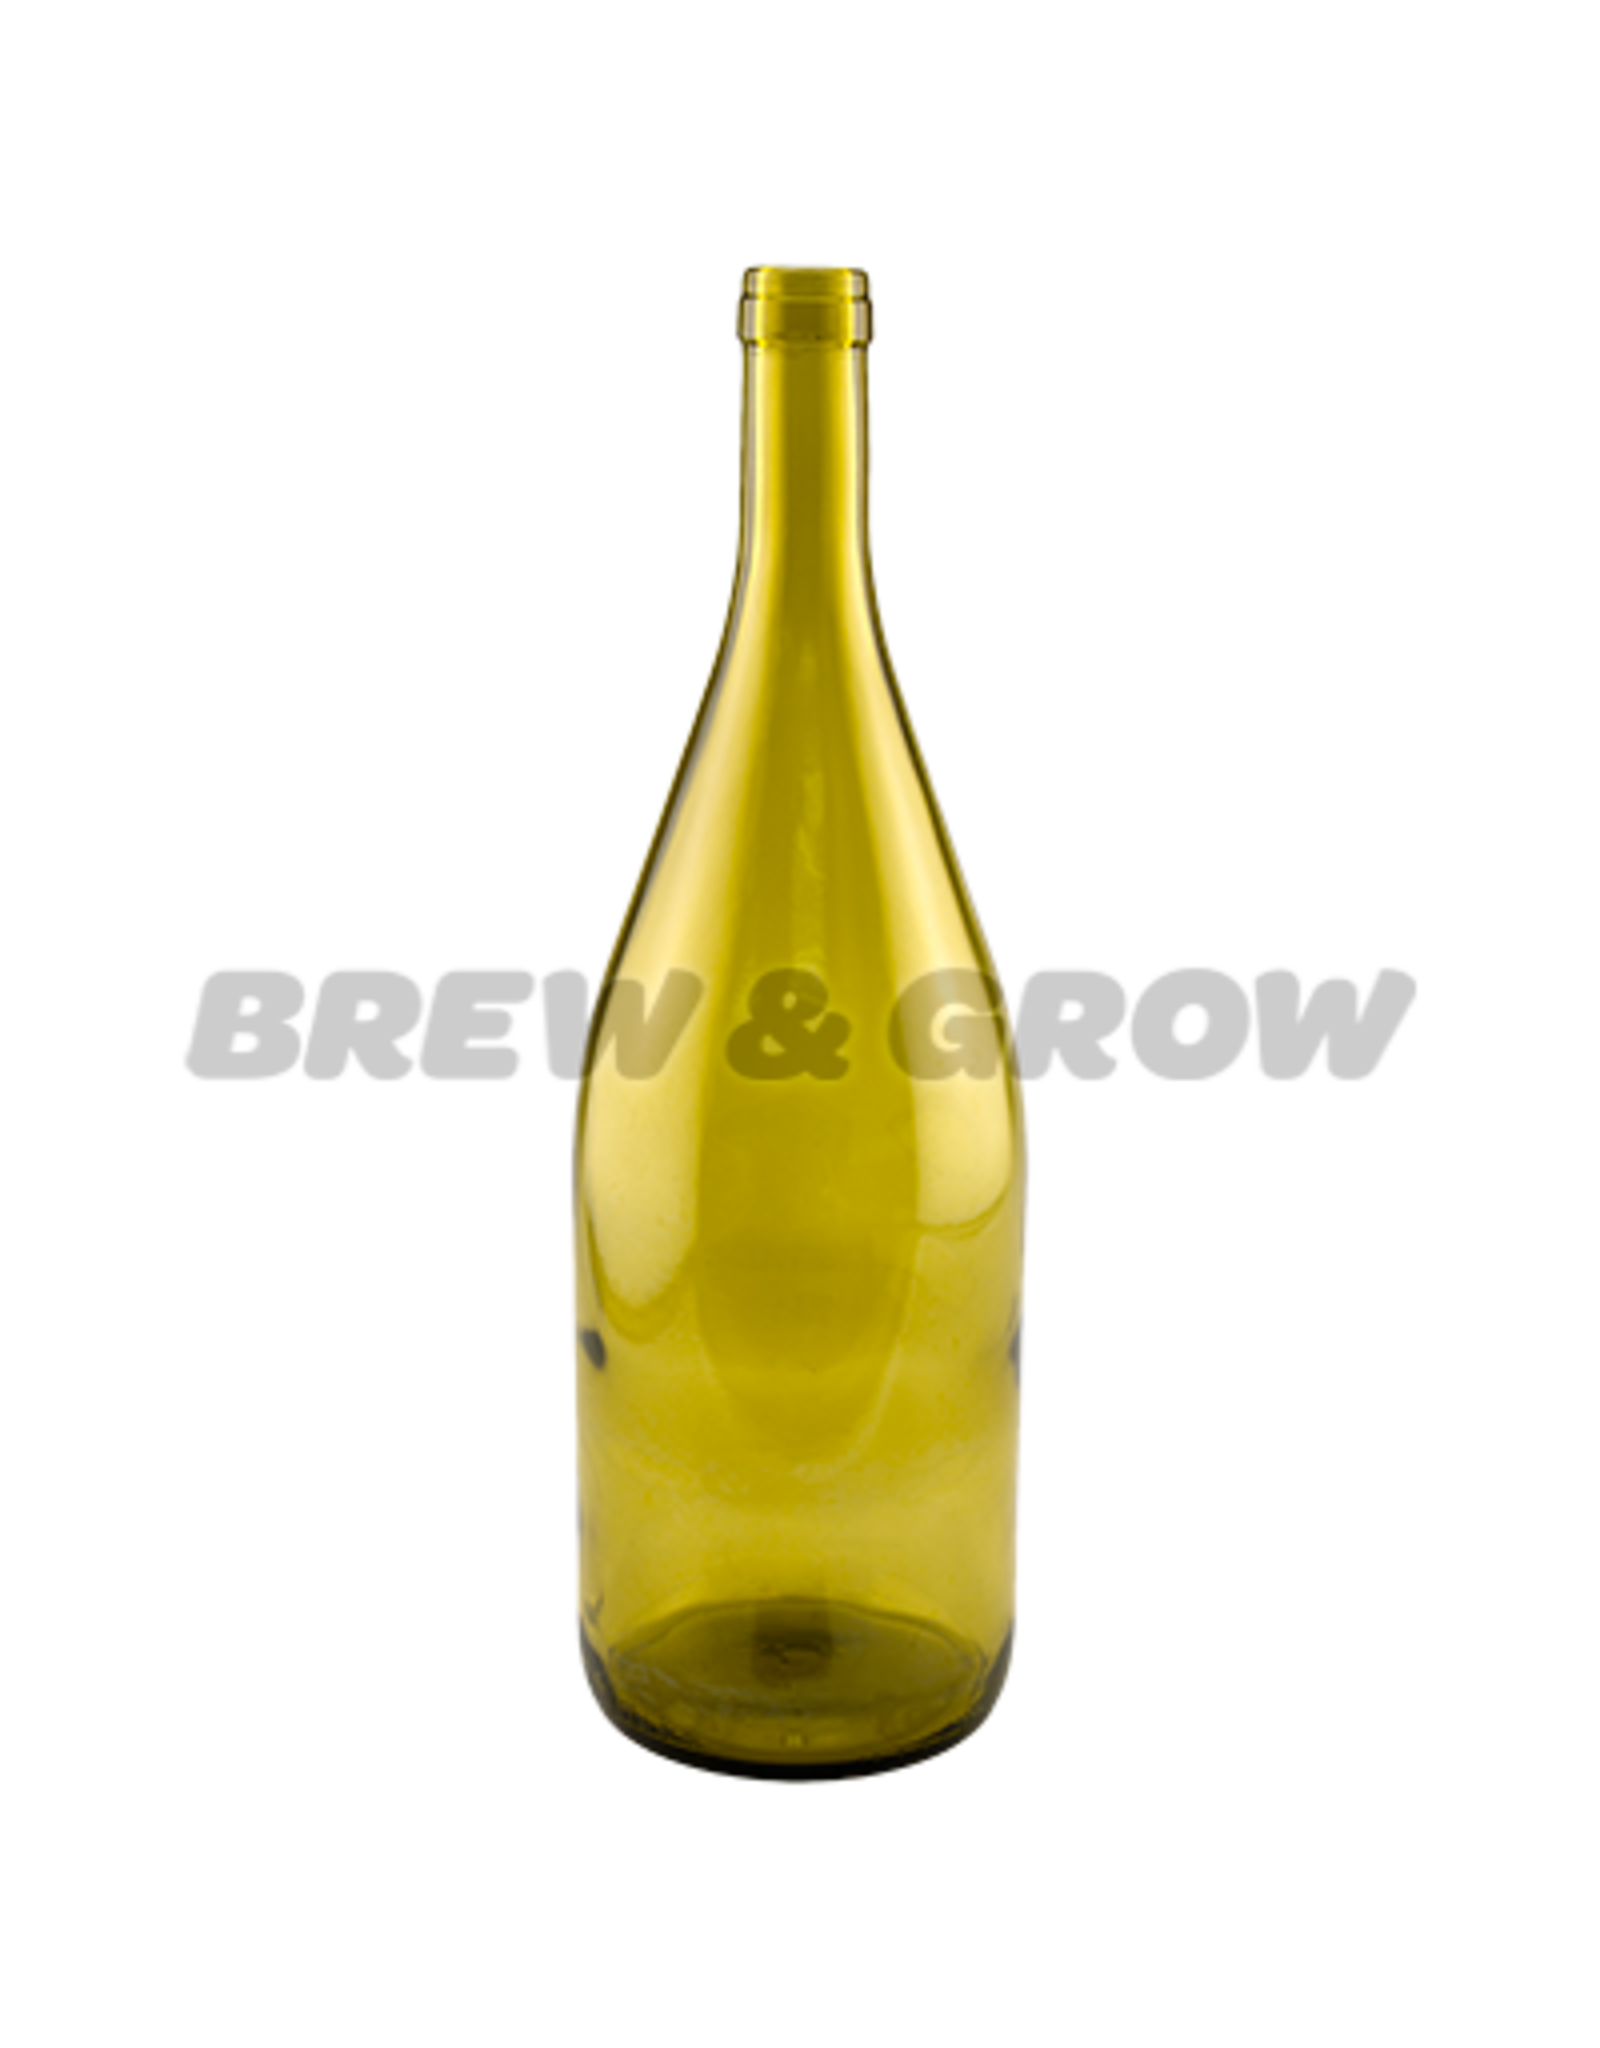 Wine Bottle Green Claret 1.5L (6/cs)